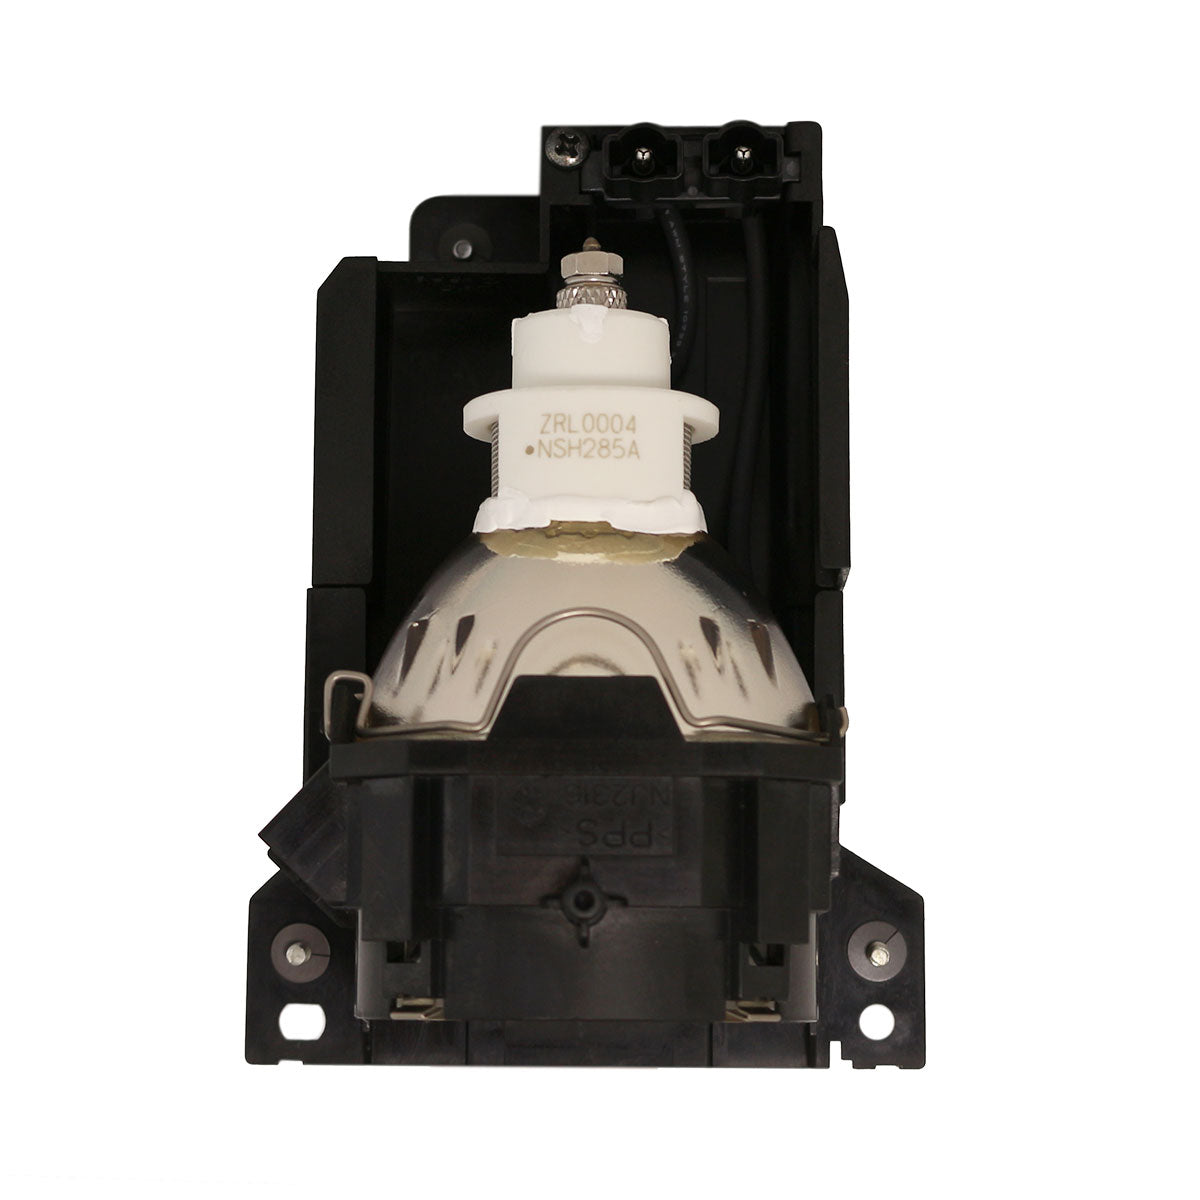 Viewsonic RLC-021 Ushio Projector Lamp Module